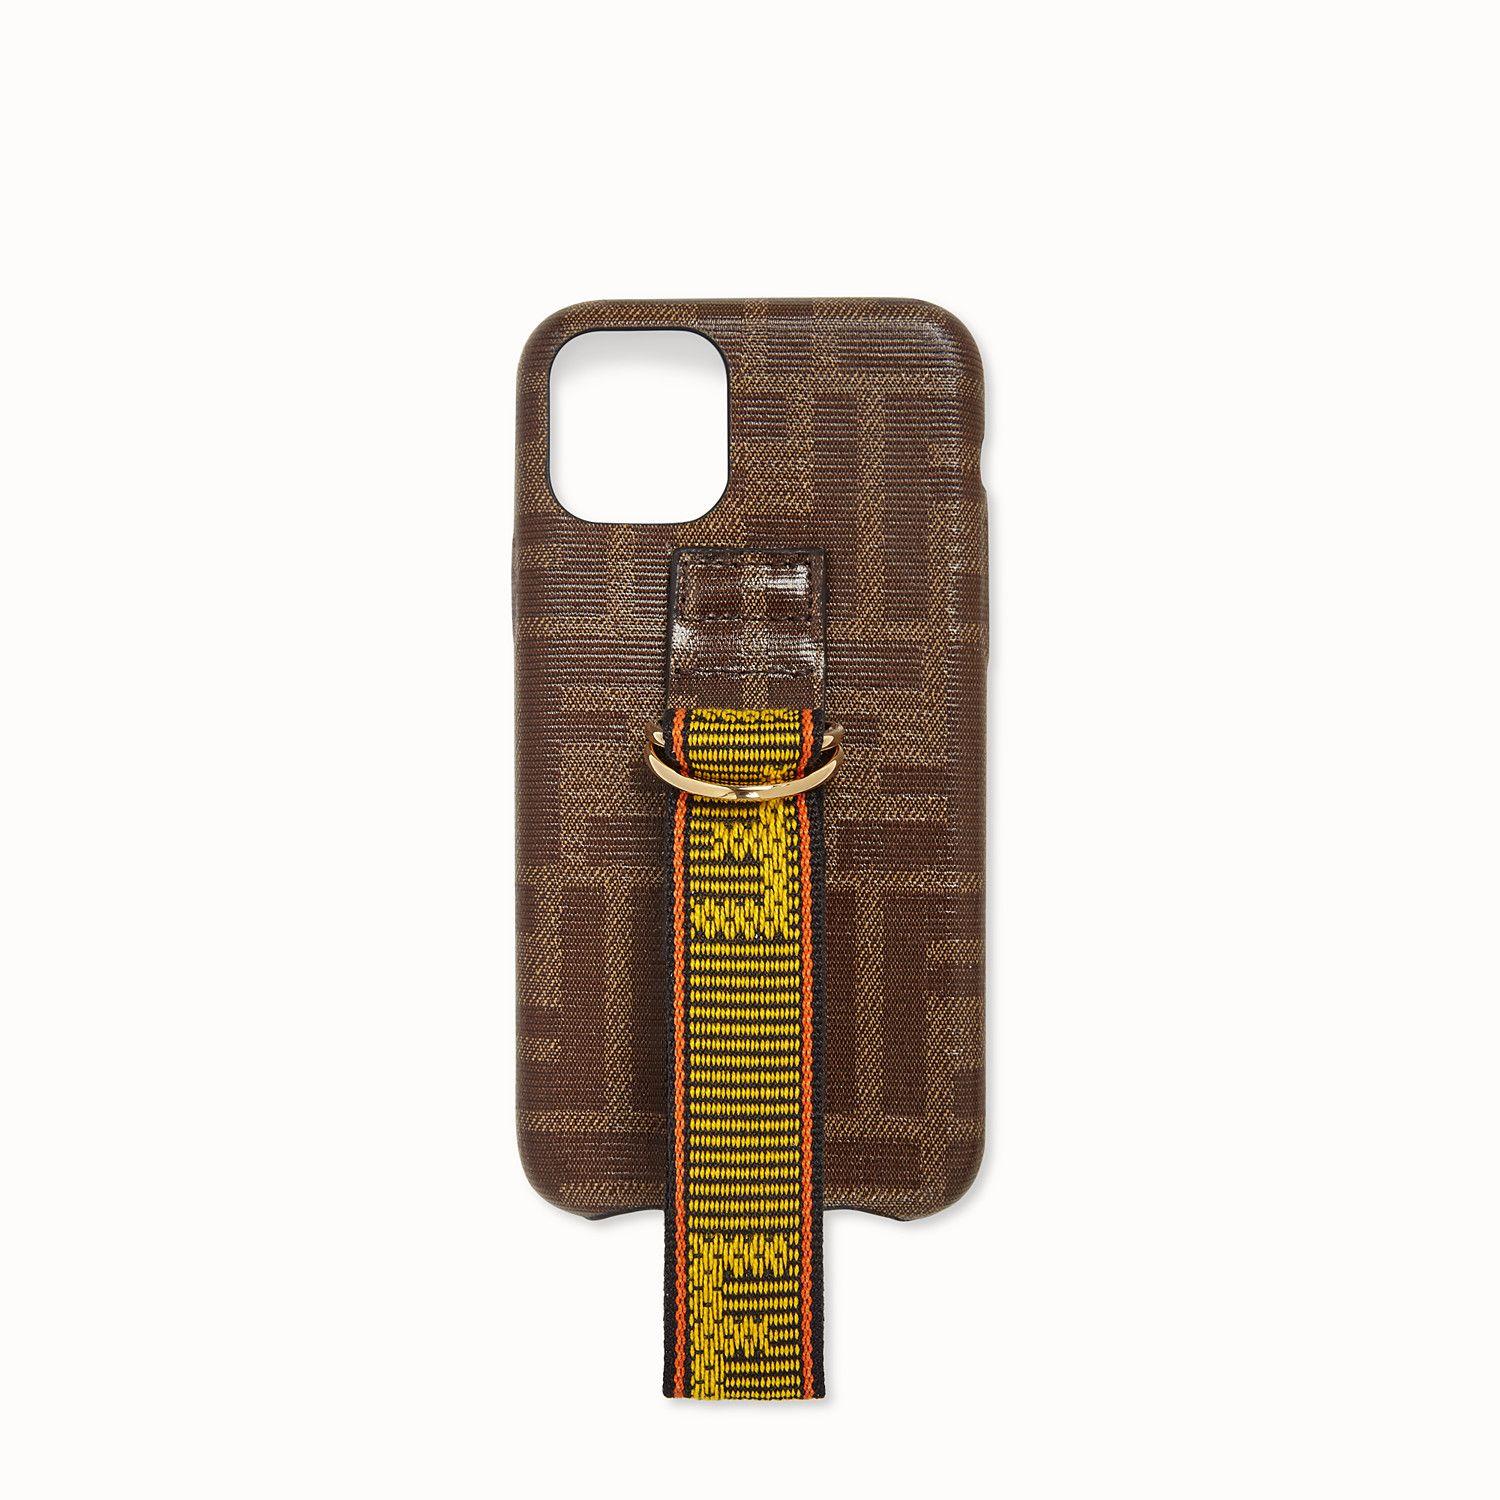 Fendi Iphone 11 Pro Case in Brown - Lyst